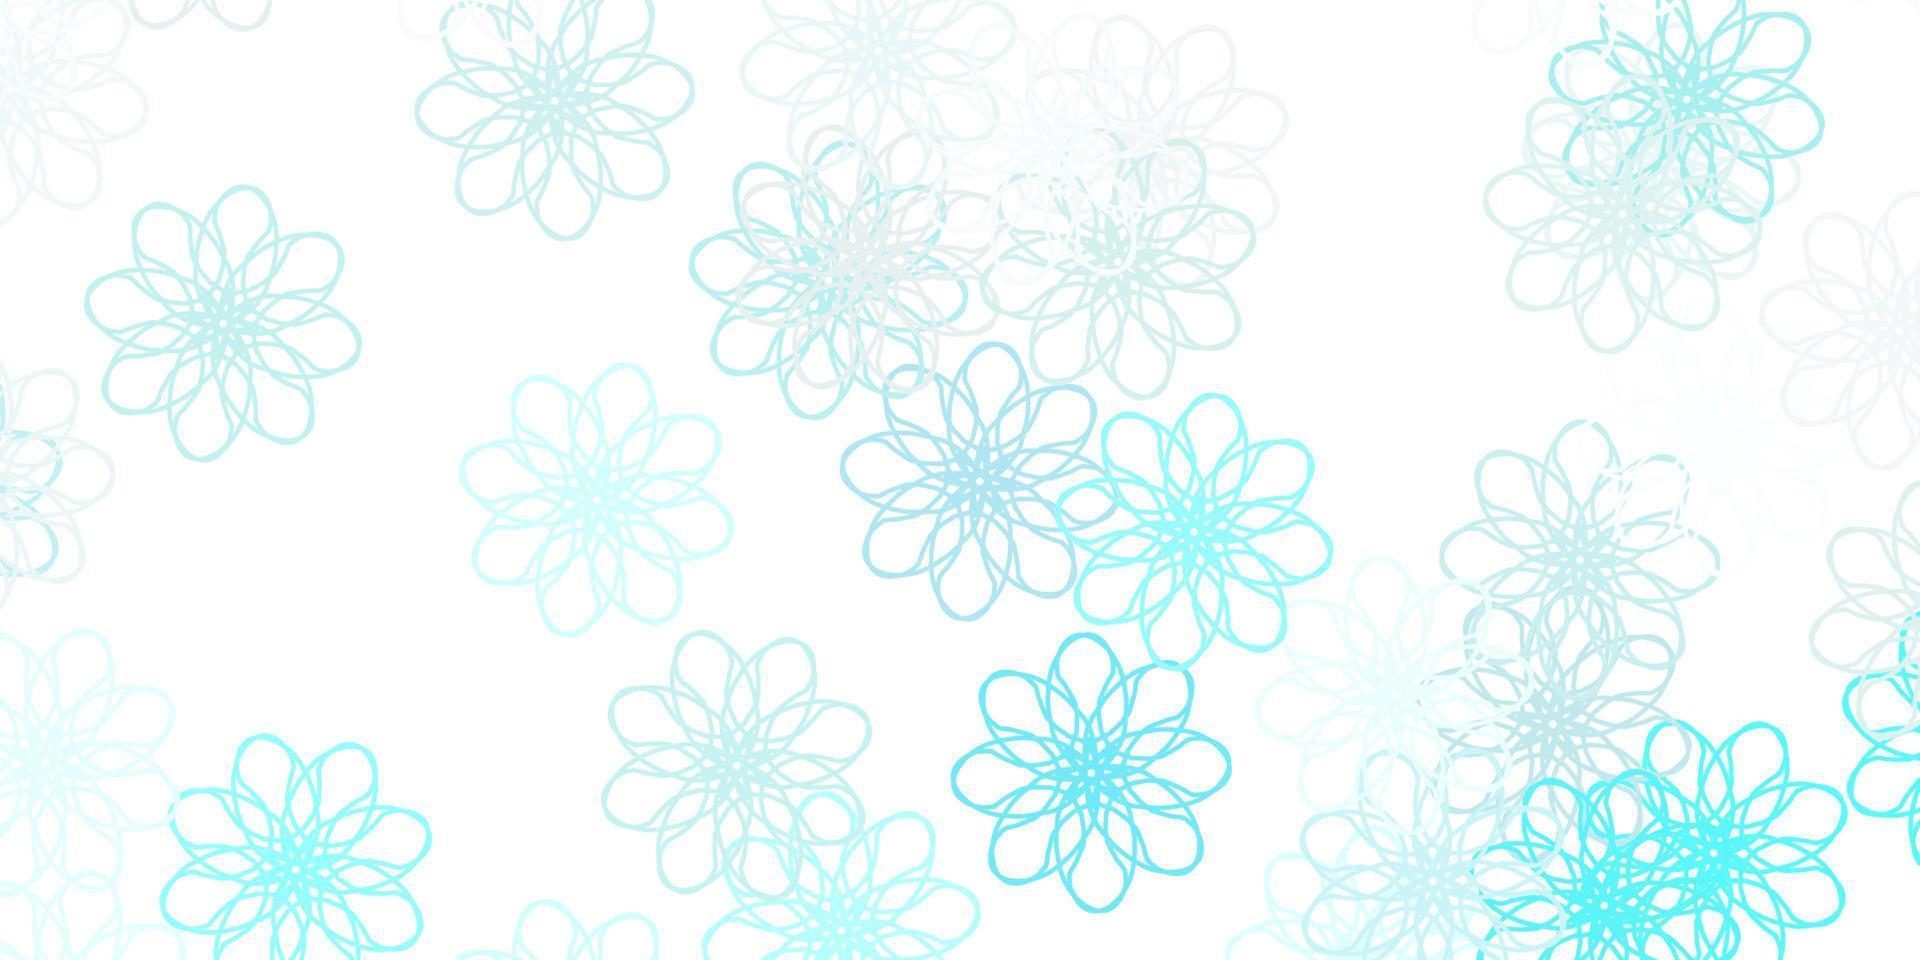 patrón de doodle de vector azul claro con flores.